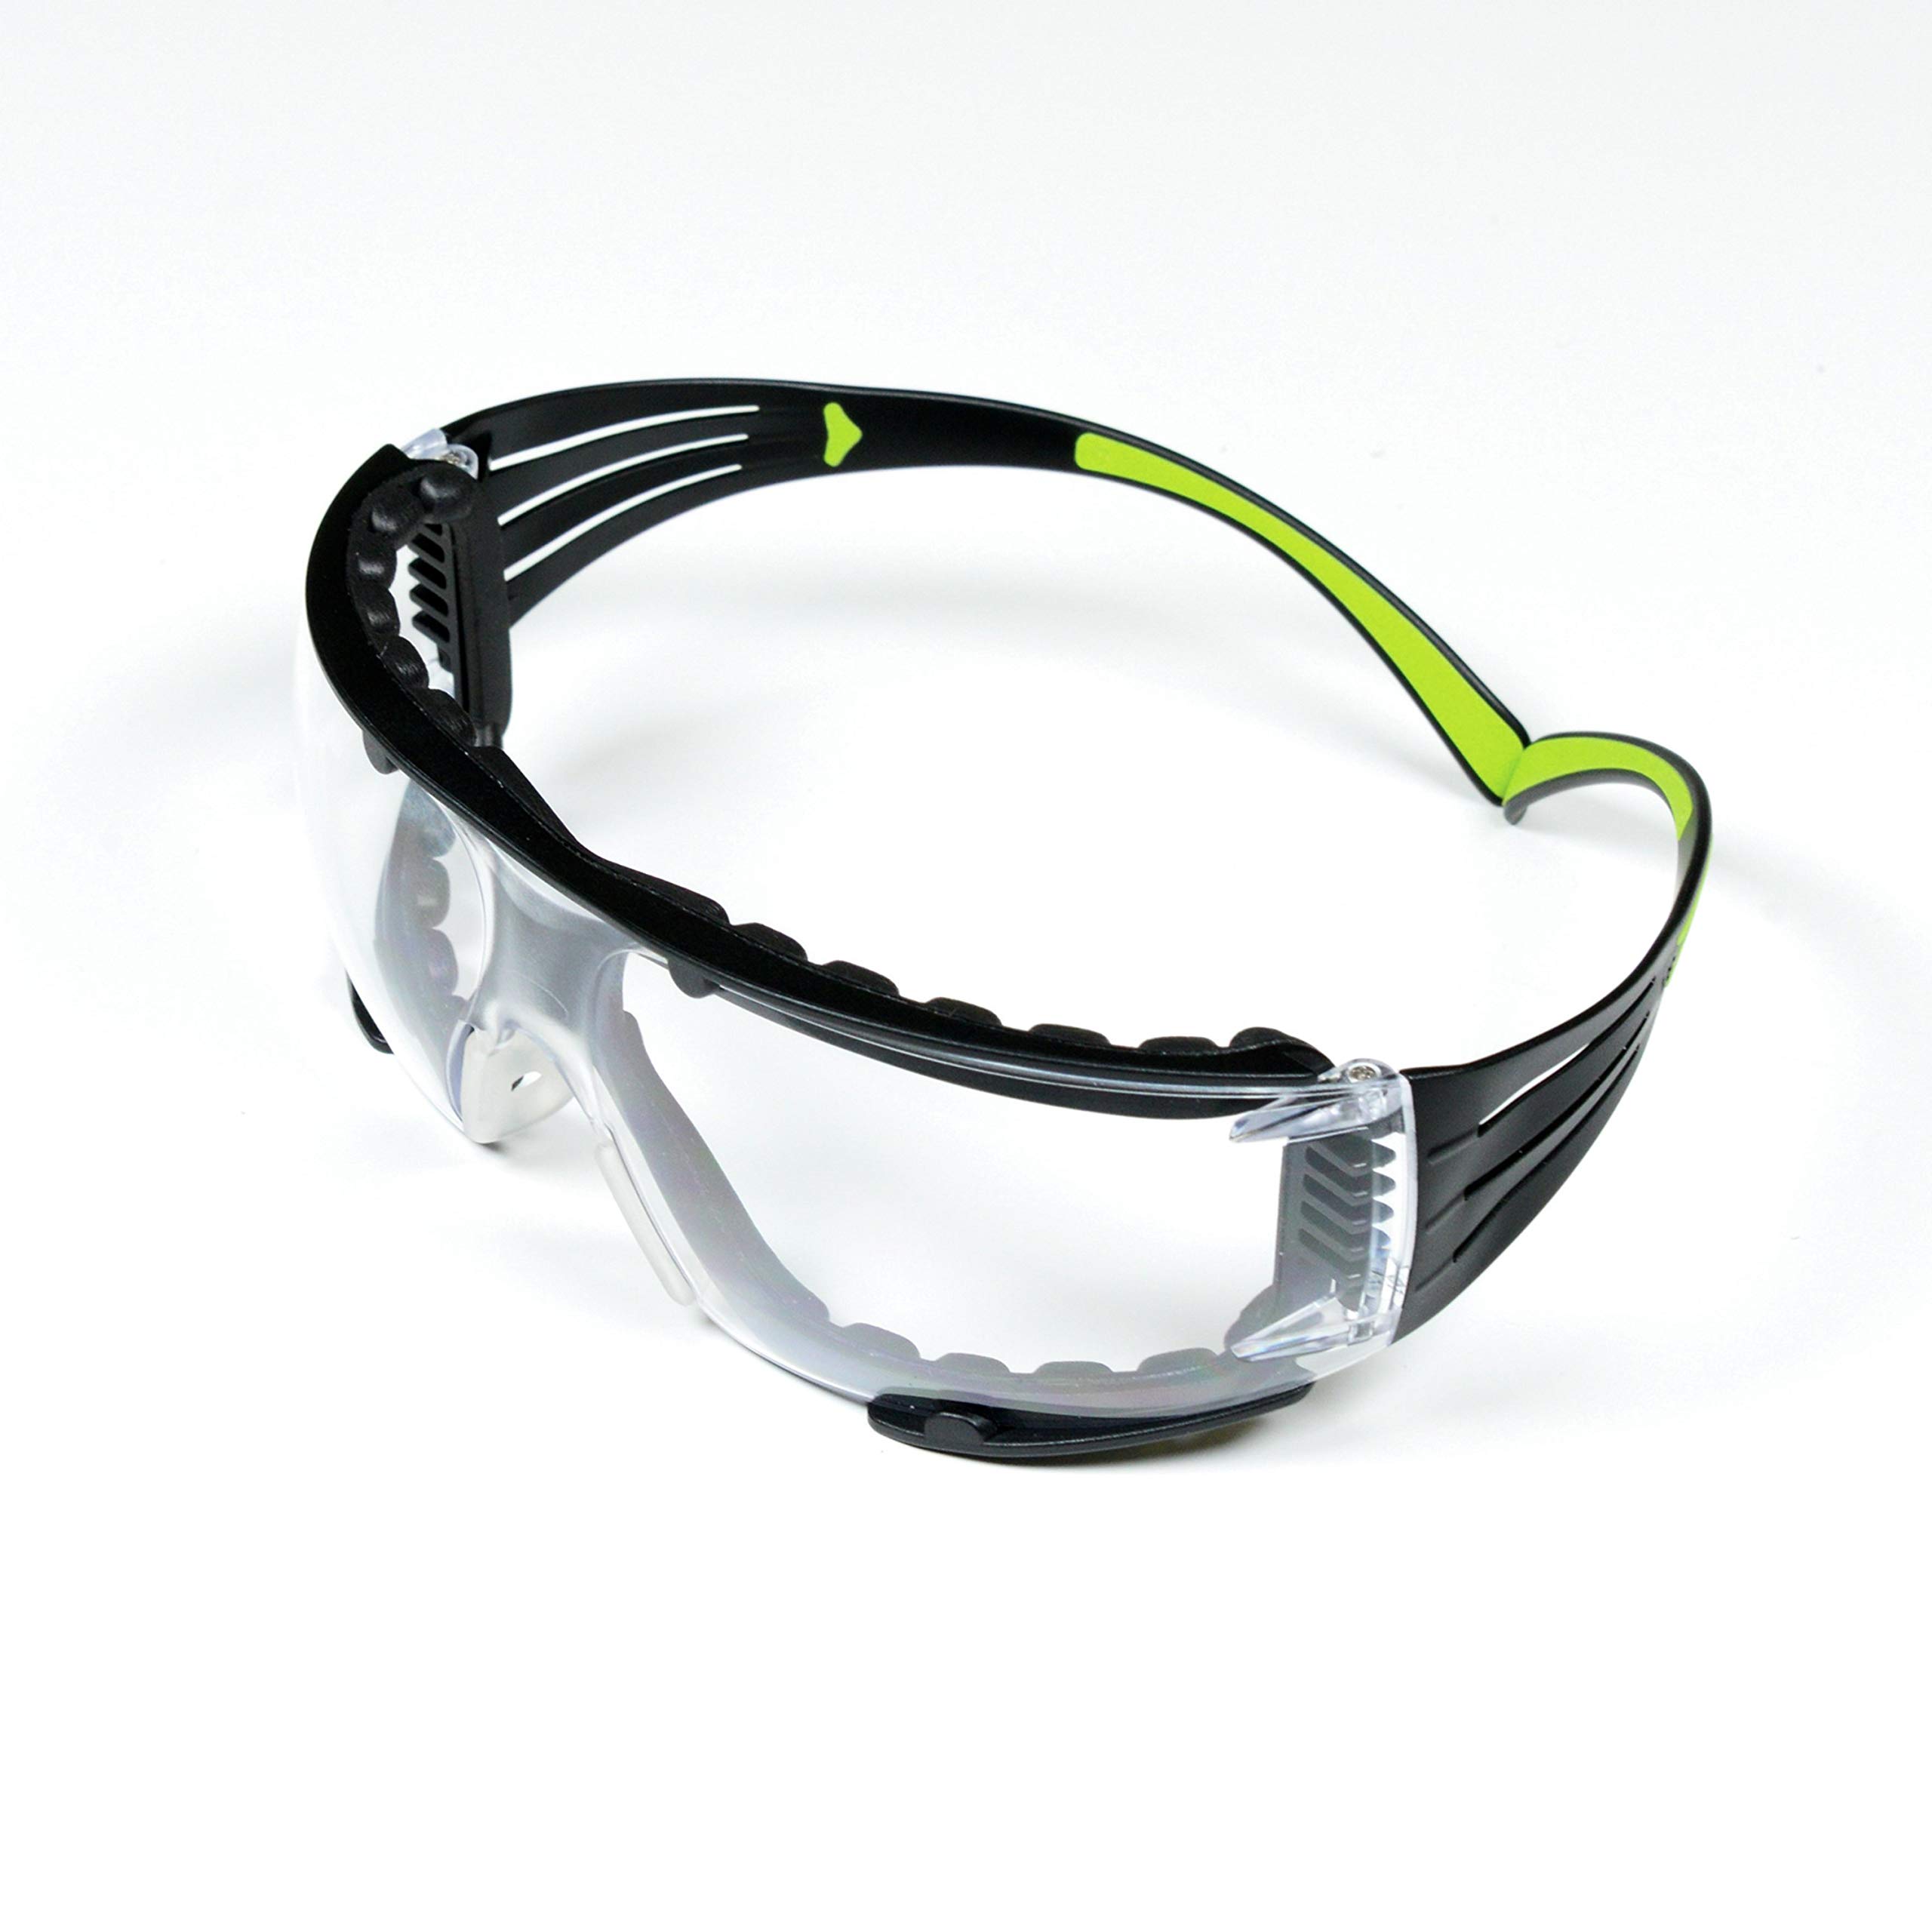 3M Safety Glasses, SecureFit, ANSI Z87, Dust Protection, Anti-Fog Anti-Scratch Clear Lens, Green/Black Frame, Flexible Temples, Removable Foam Gasket